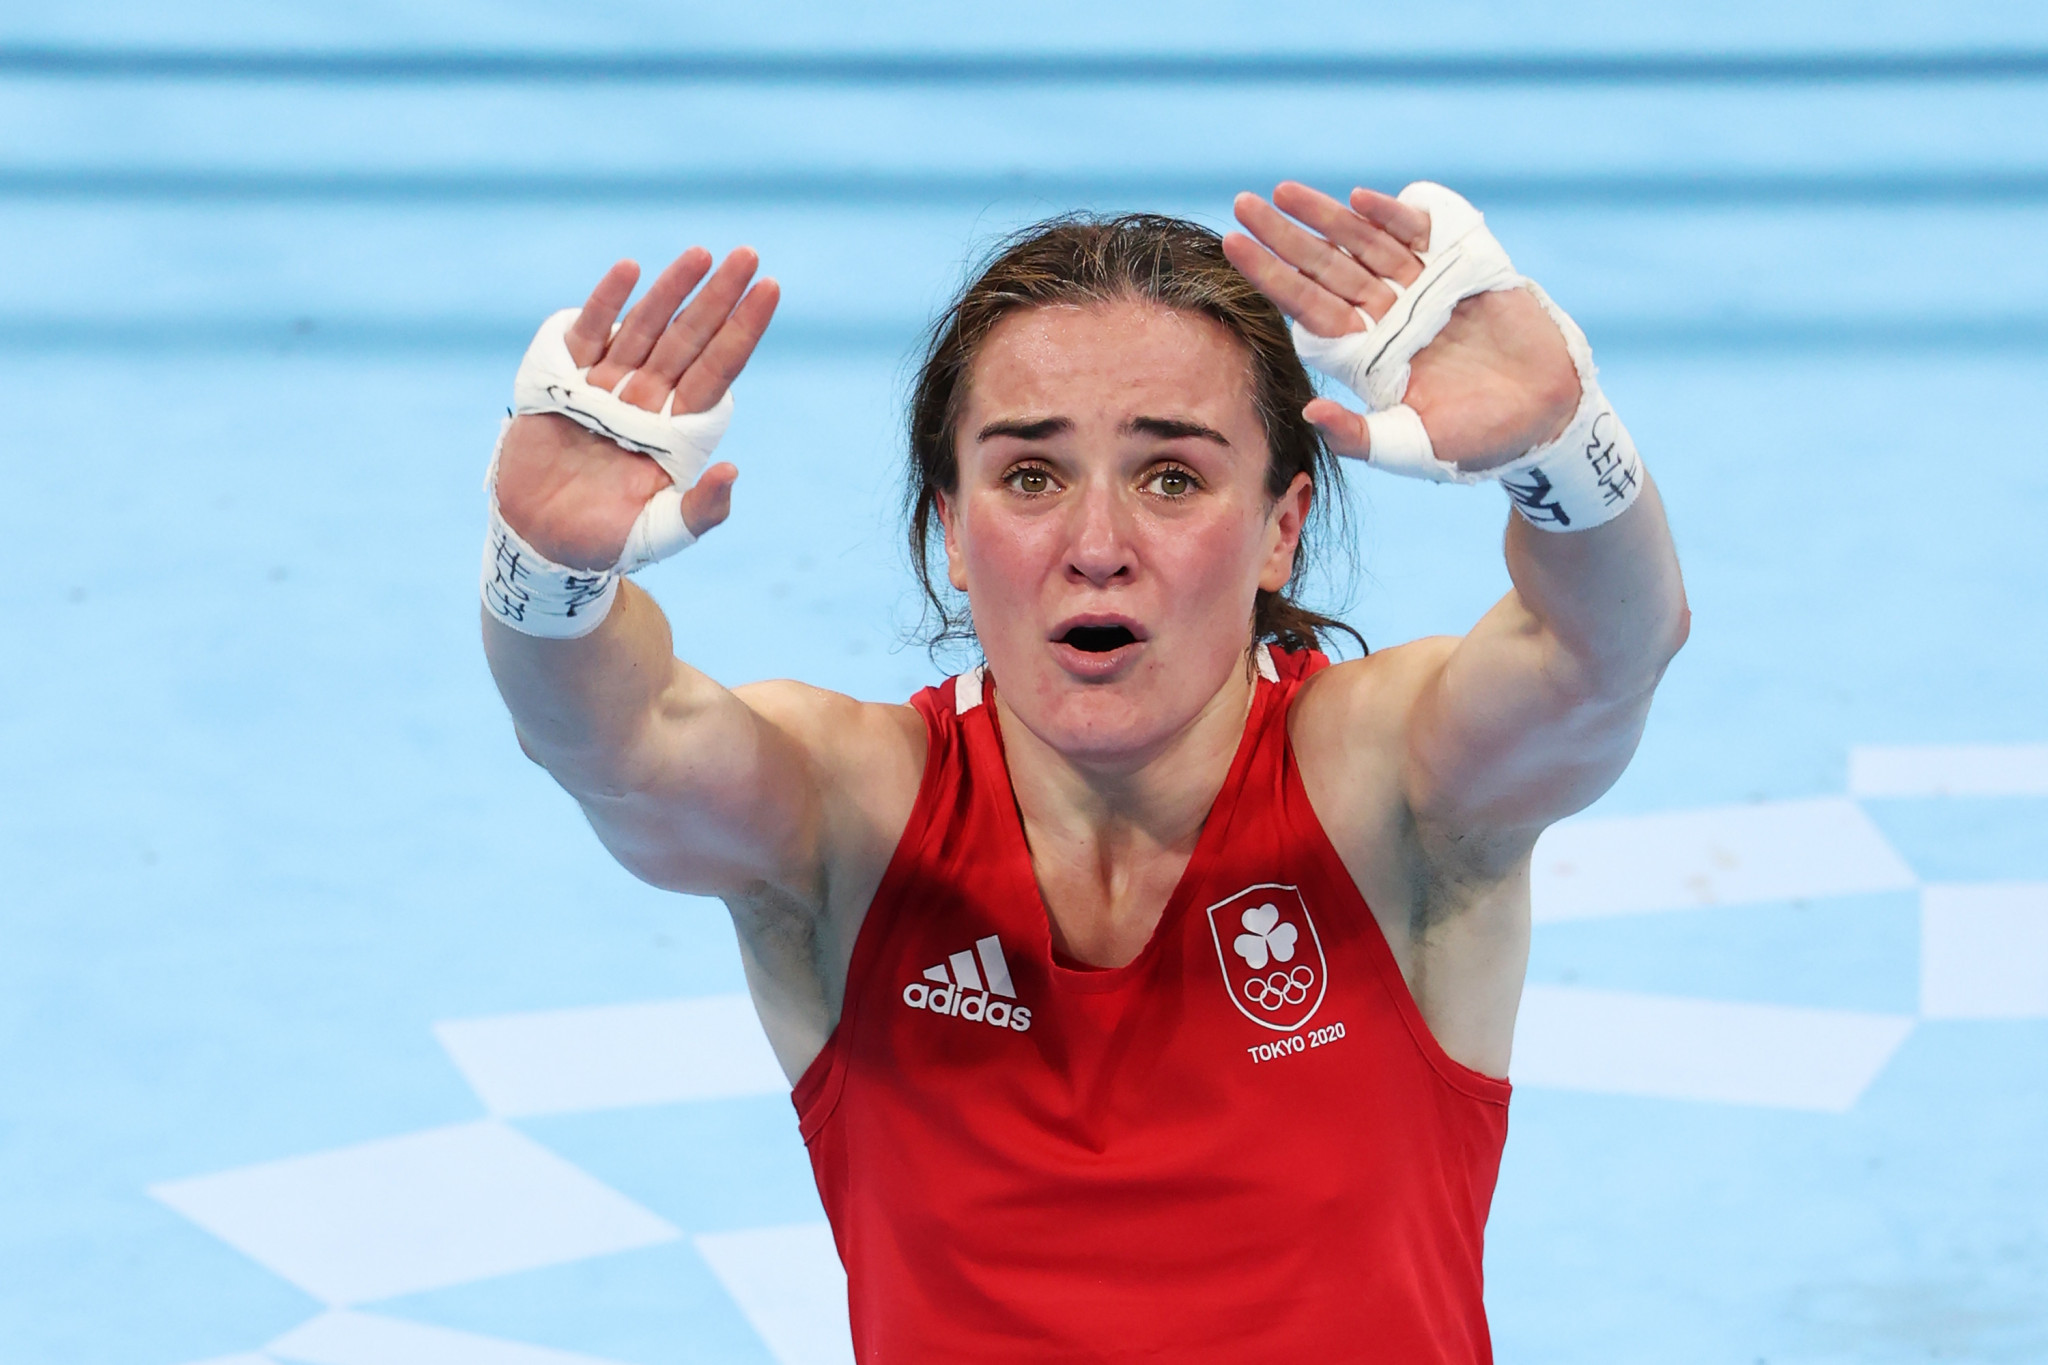 World champion Akbaş stunned at European Women's Boxing Championships but Harrington wins